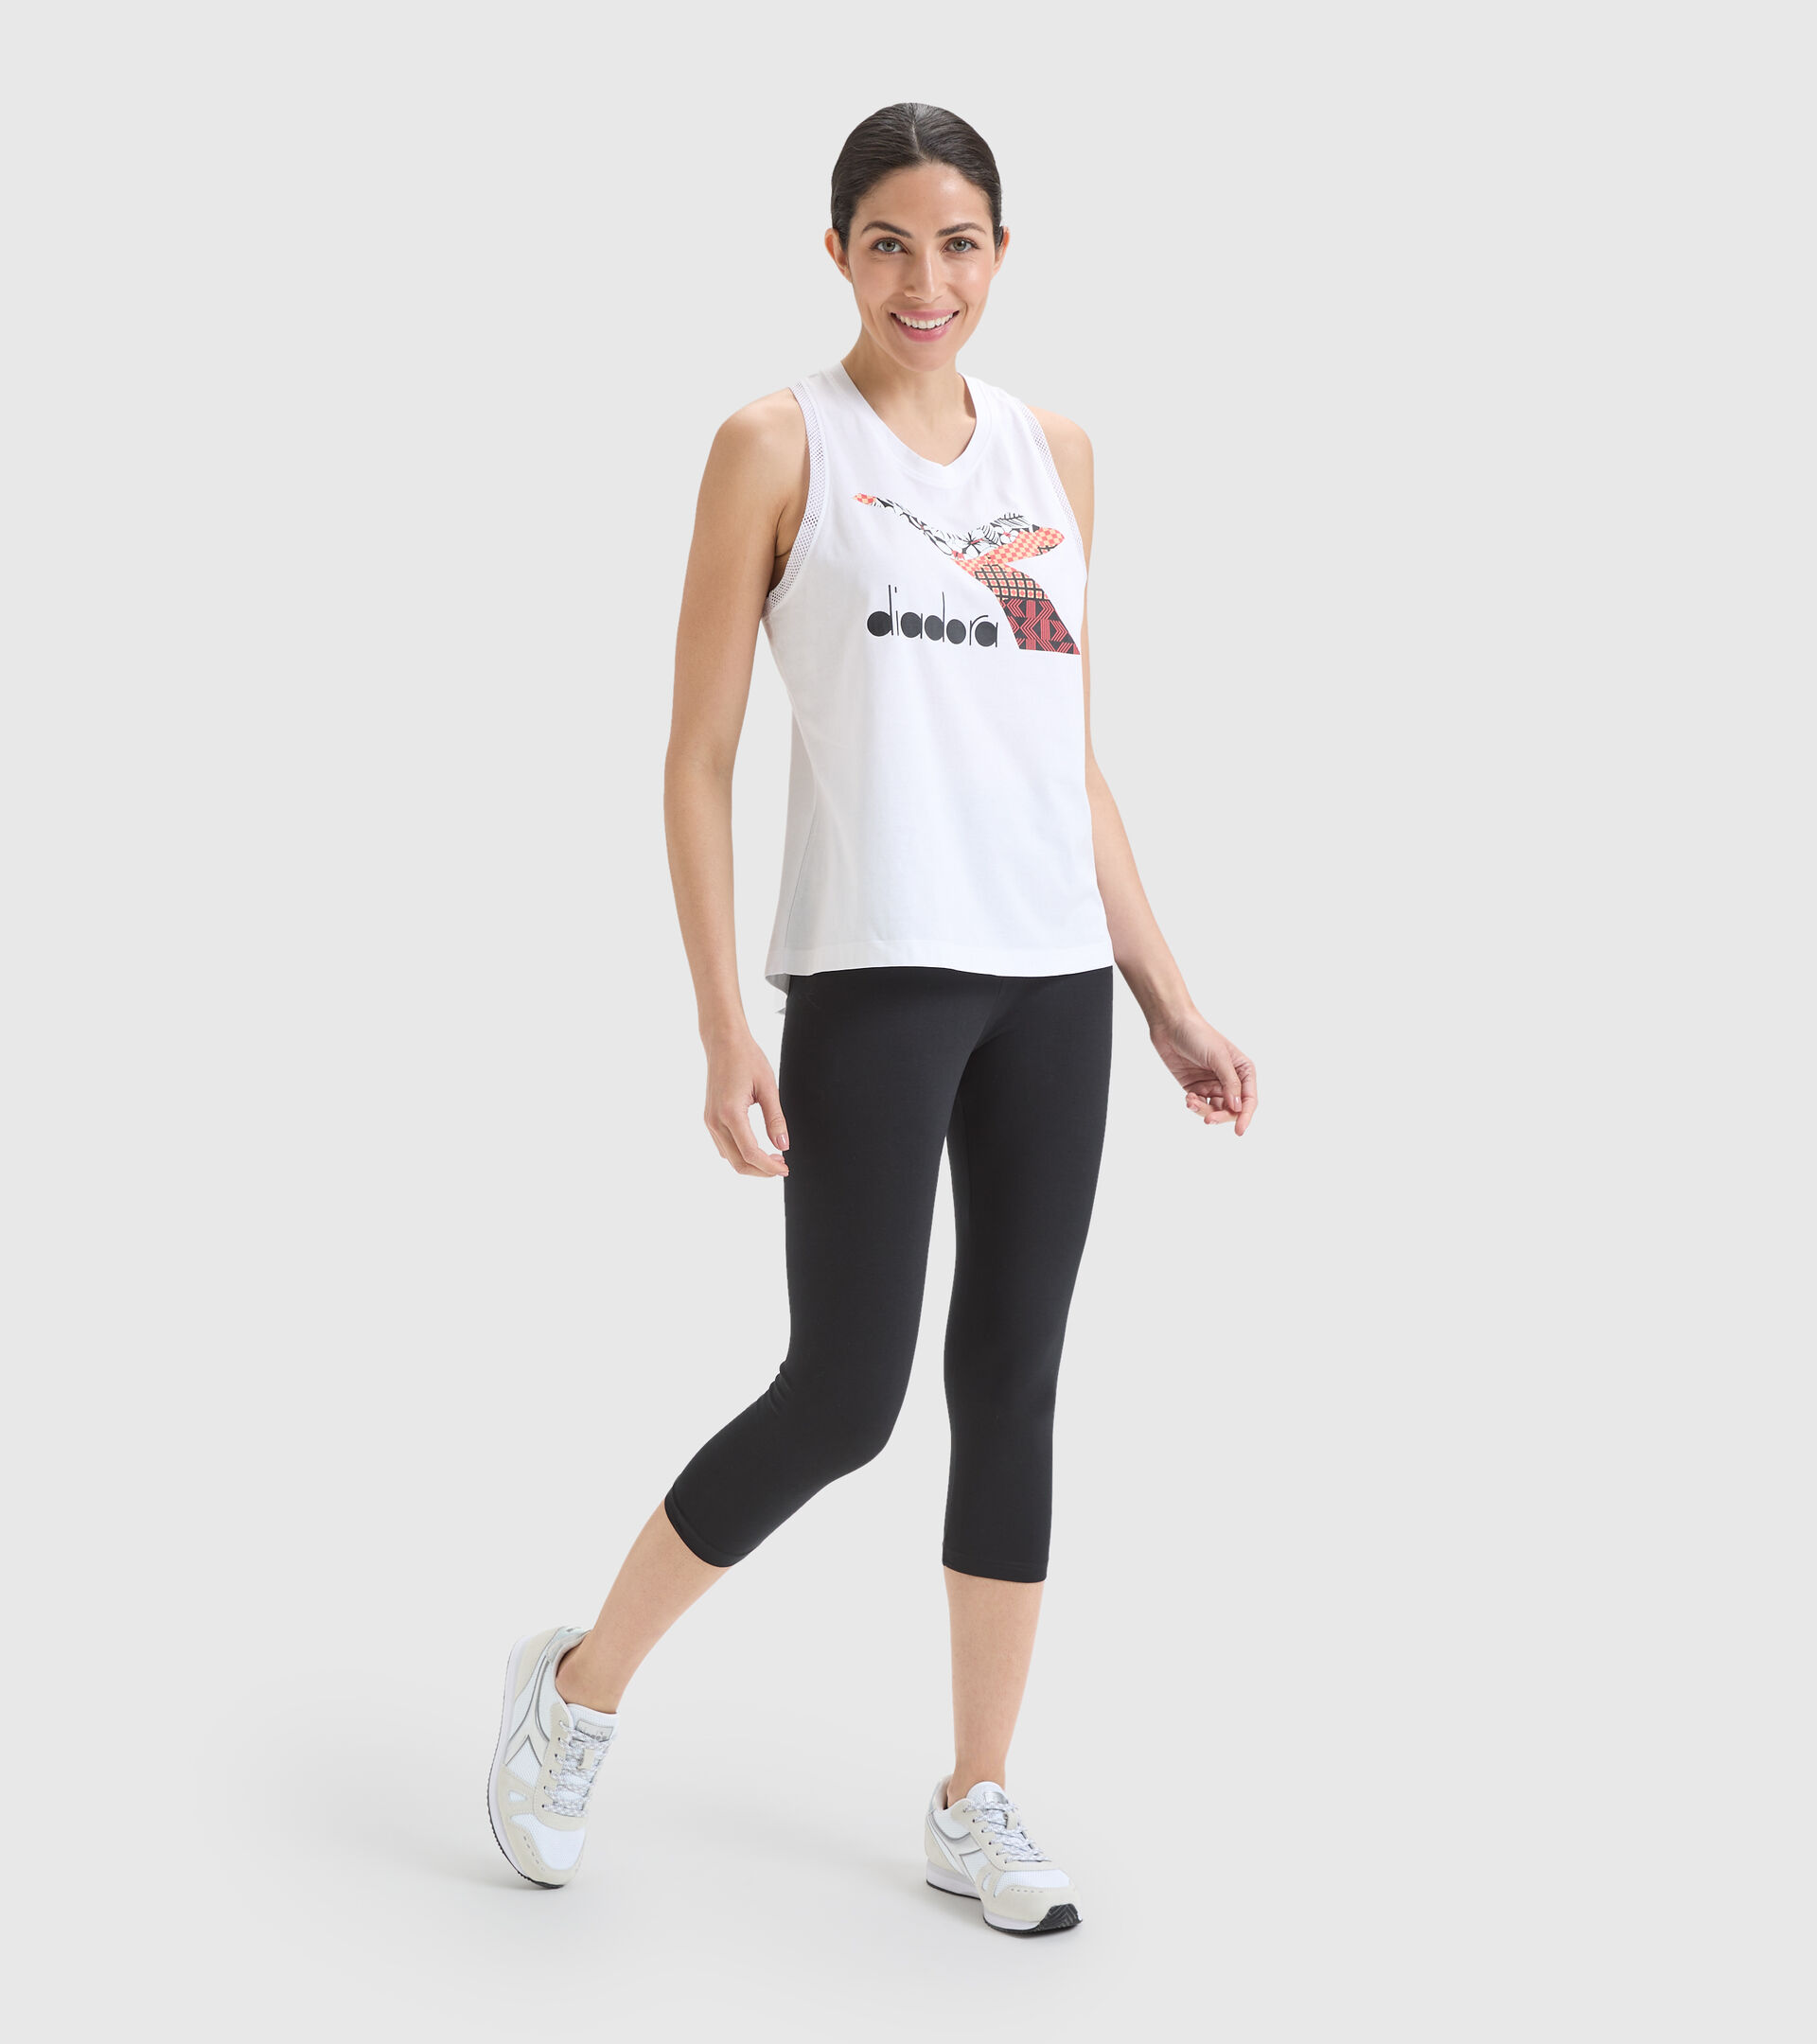 Camiseta sin mangas deportiva de algodón - Mujer L. TANK FLOSS BLANCO VIVO - Diadora